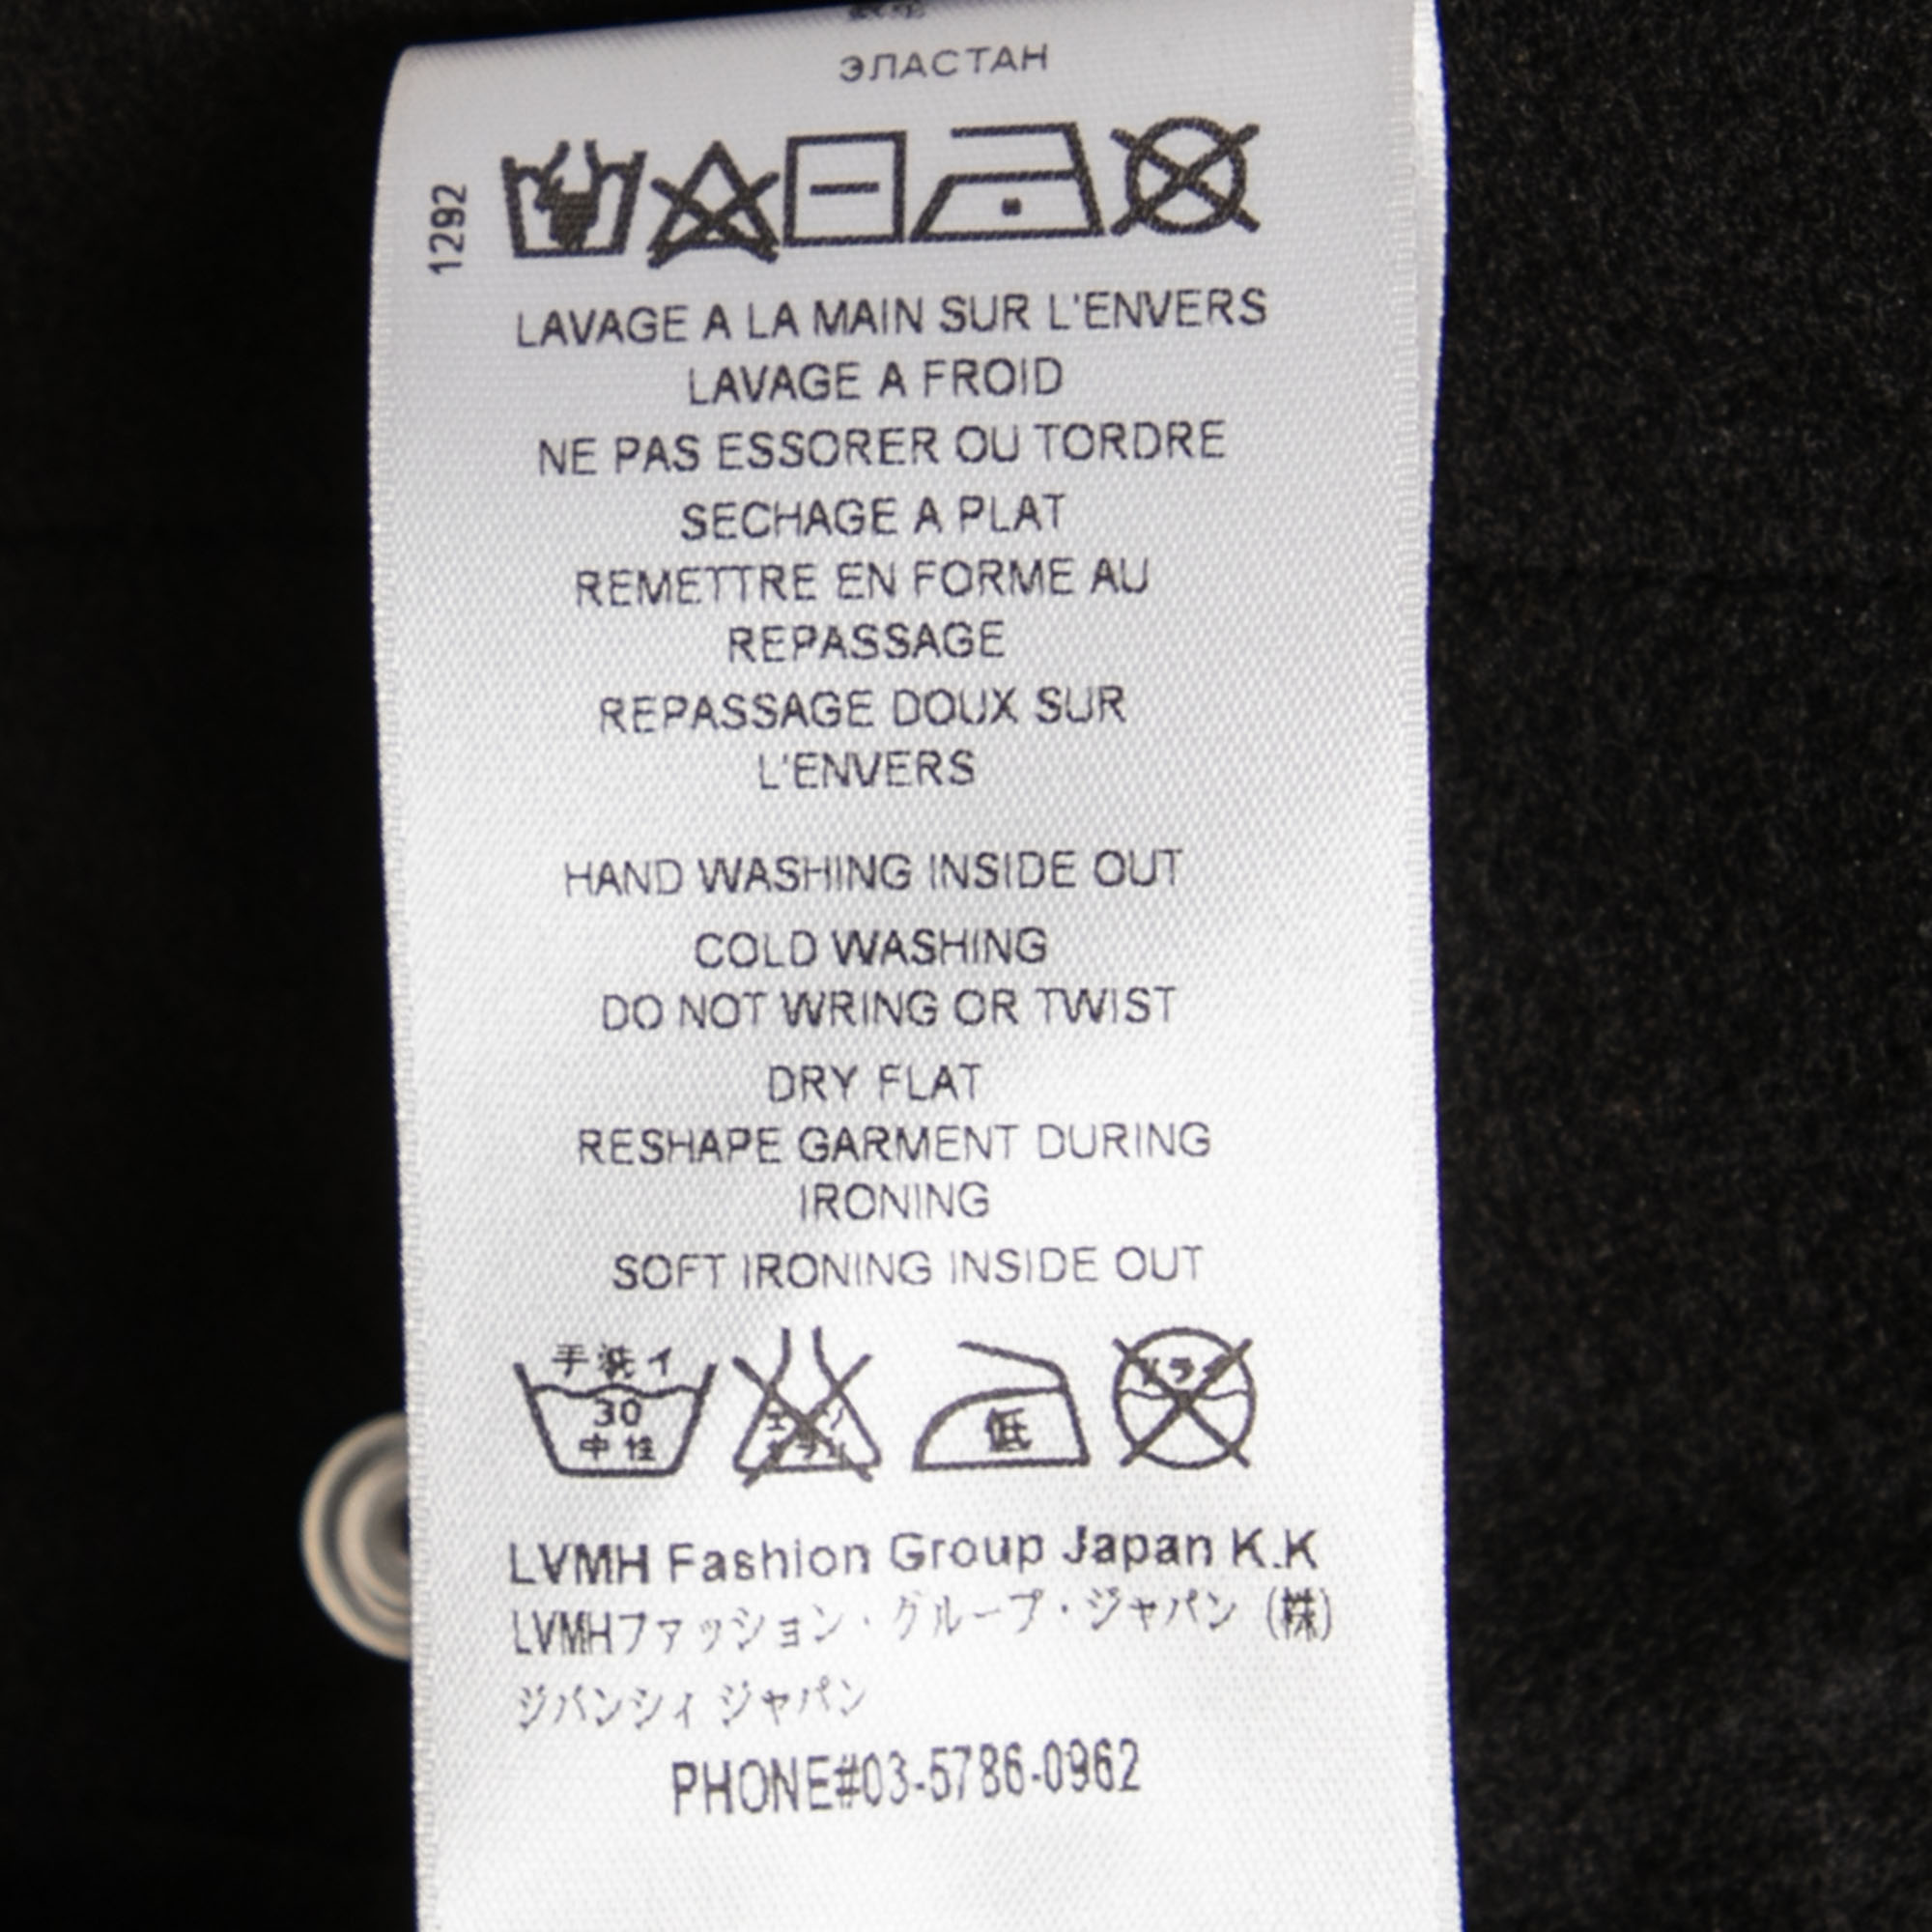 Givenchy Black Jersey Logo Tape Trimmed Zip Front Jacket M